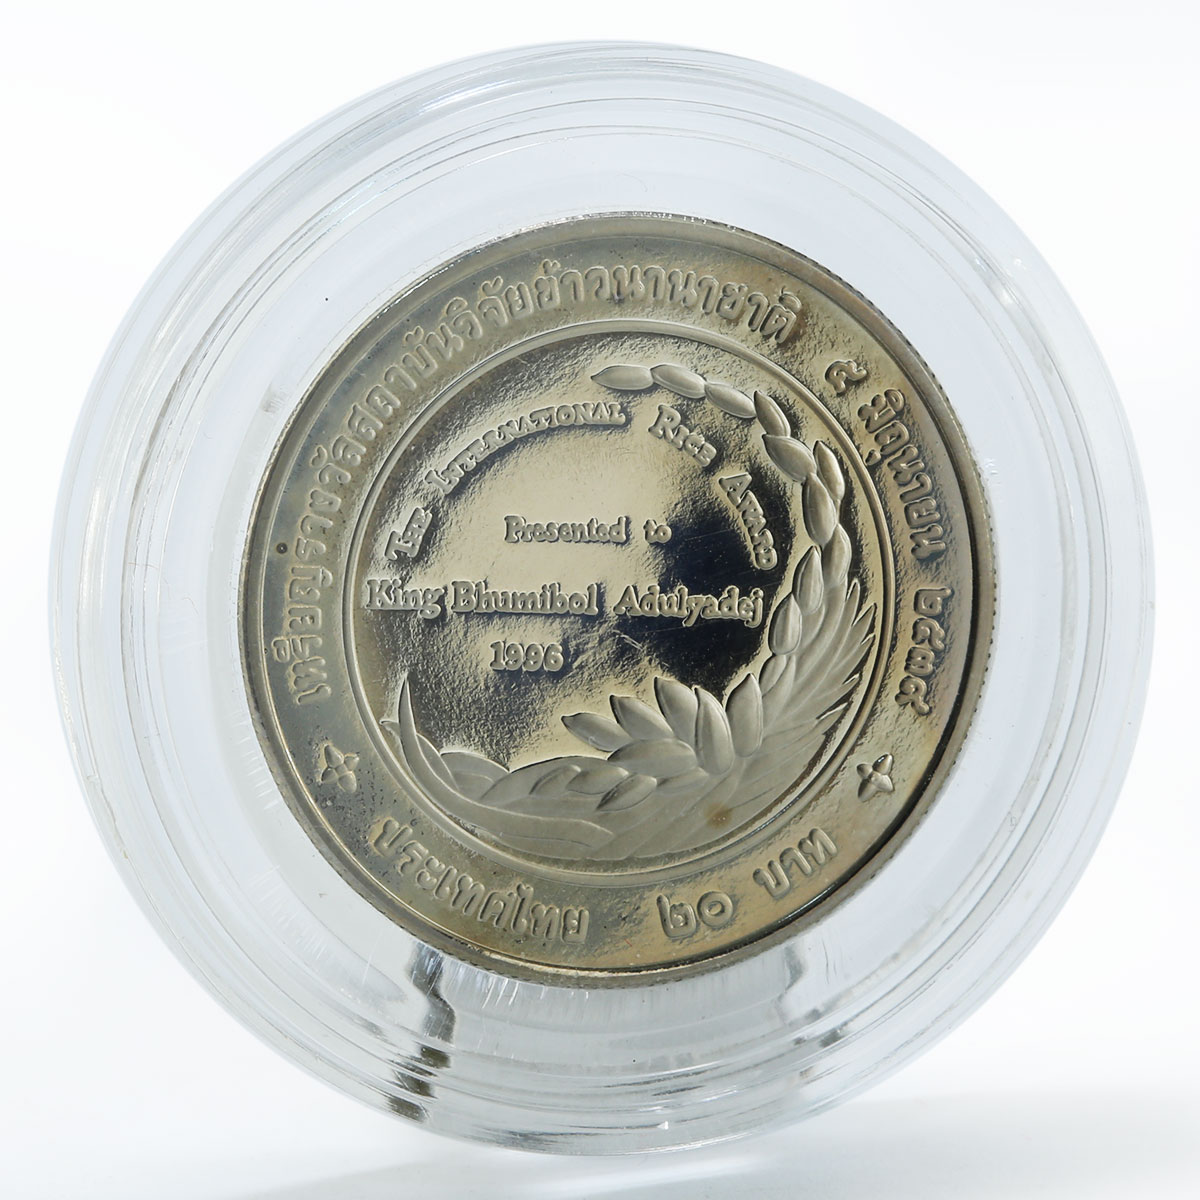 Thailand 20 baht International Rice Award proof coin 1996